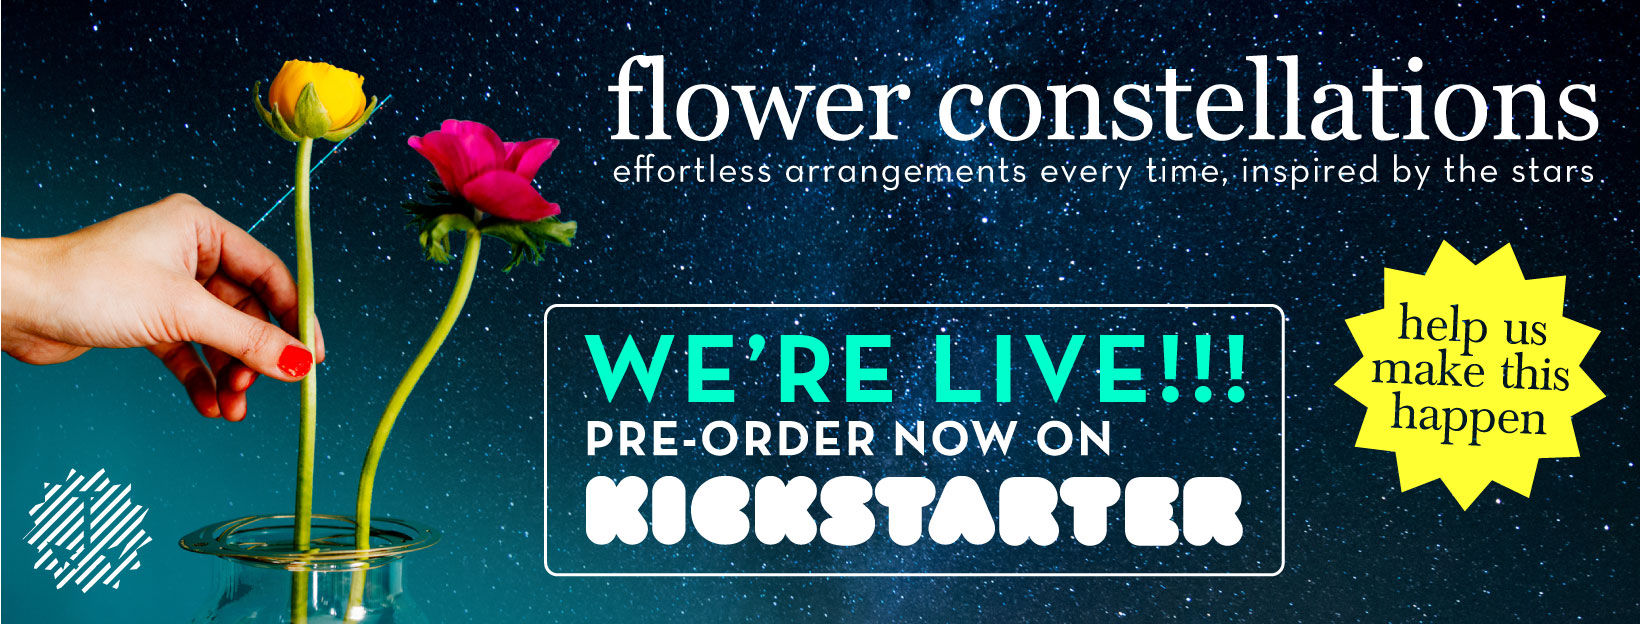 Flower Constellations / Effortless arrangements, inspired by the stars - pre-order now on Kickstarter